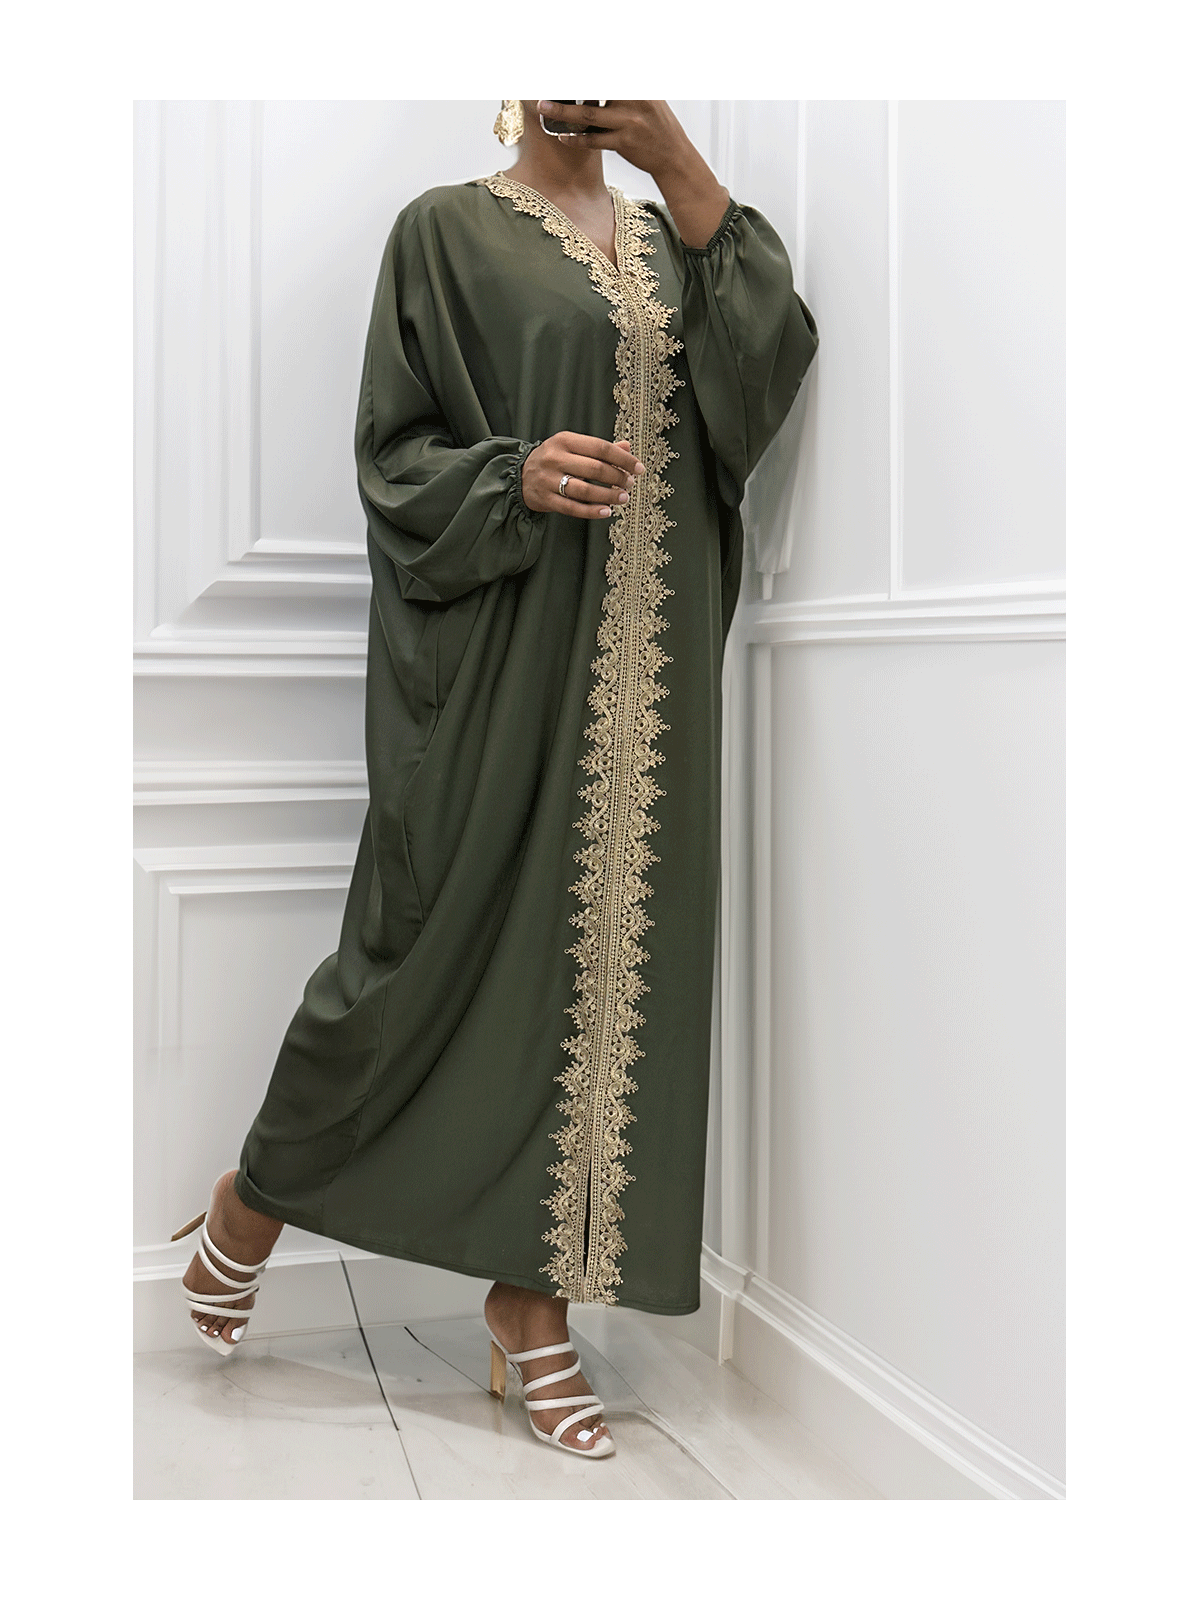 Longue abaya kaki over size avec une jolie dentelle  - 2